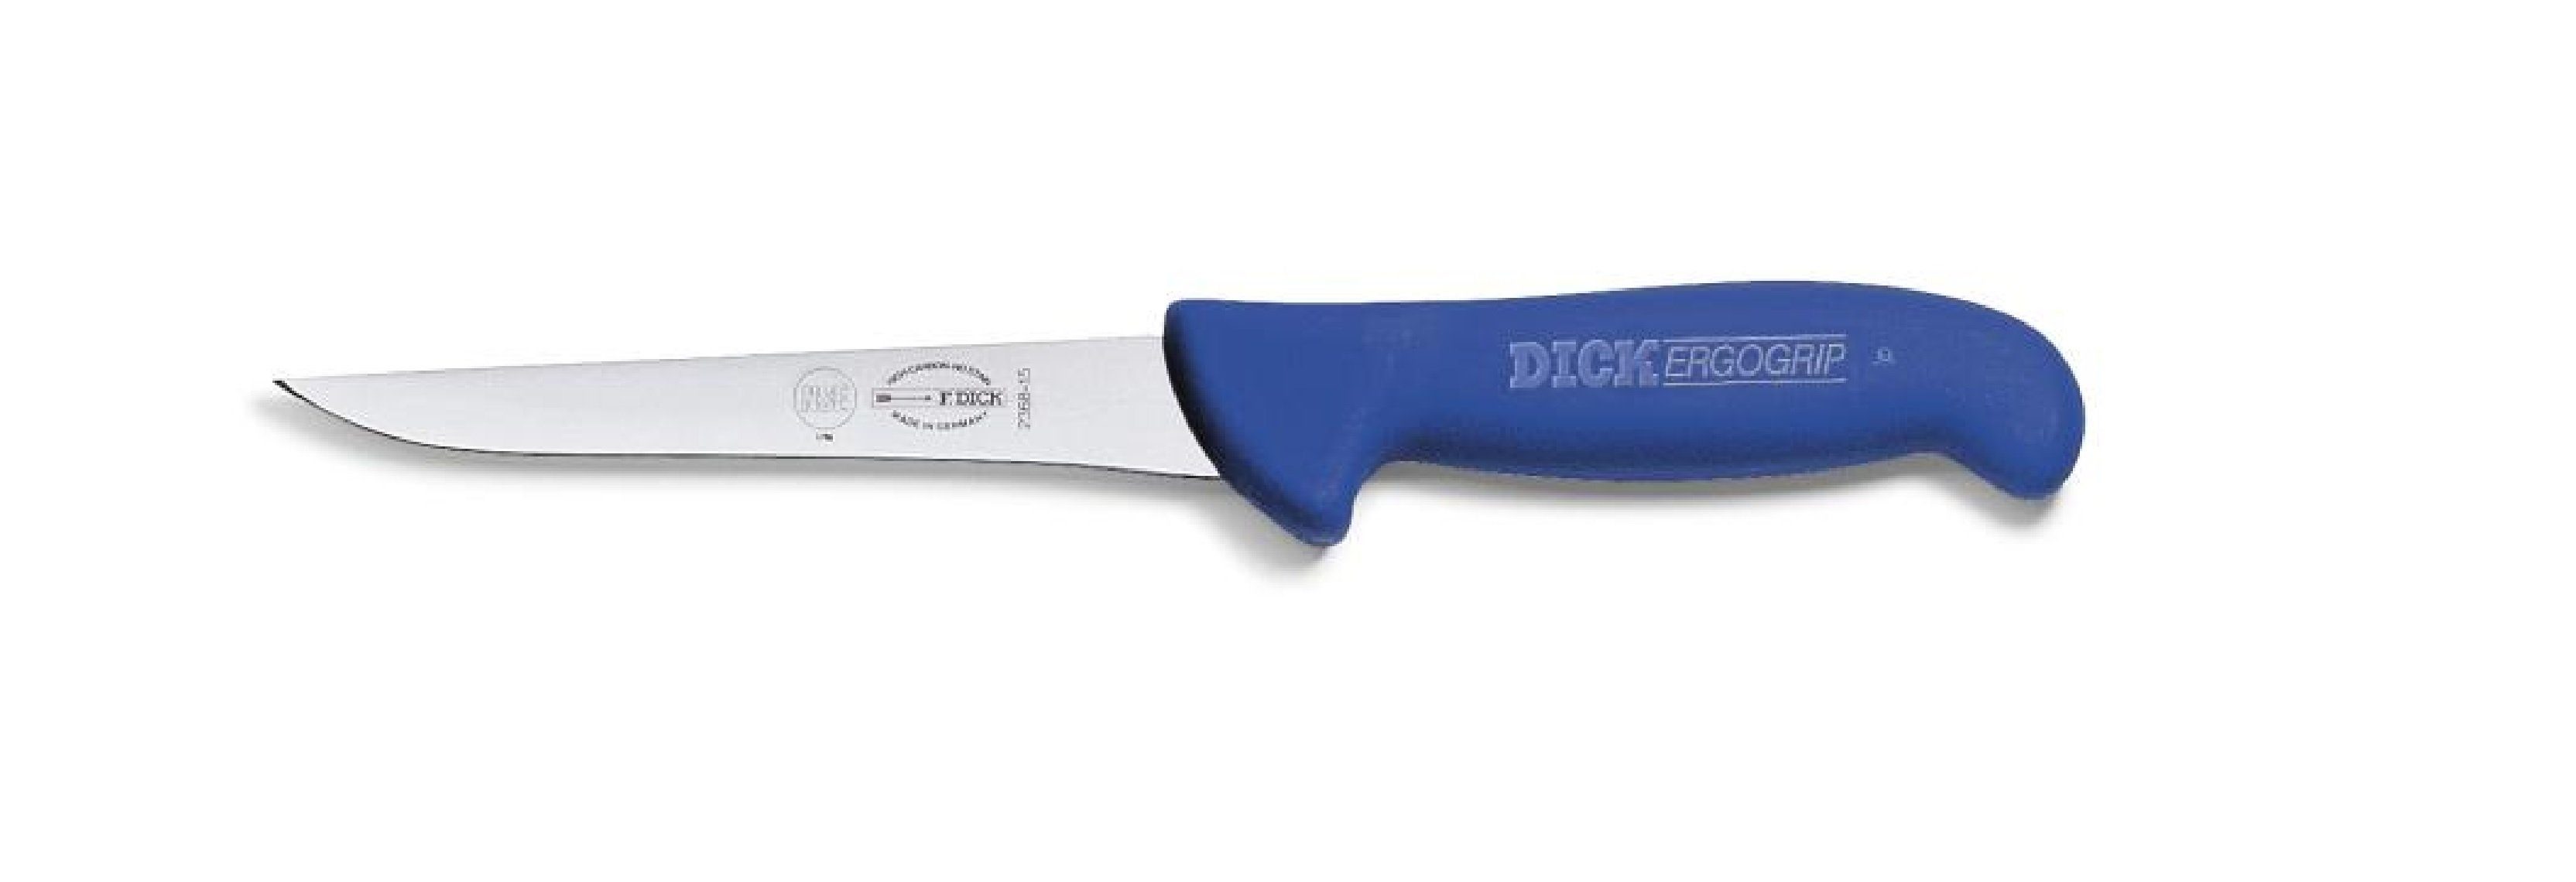 Dick Ausbeinmesser Dick Ausbeinmesser Ergogrip Klinge cm schmale Messer 15 8236815